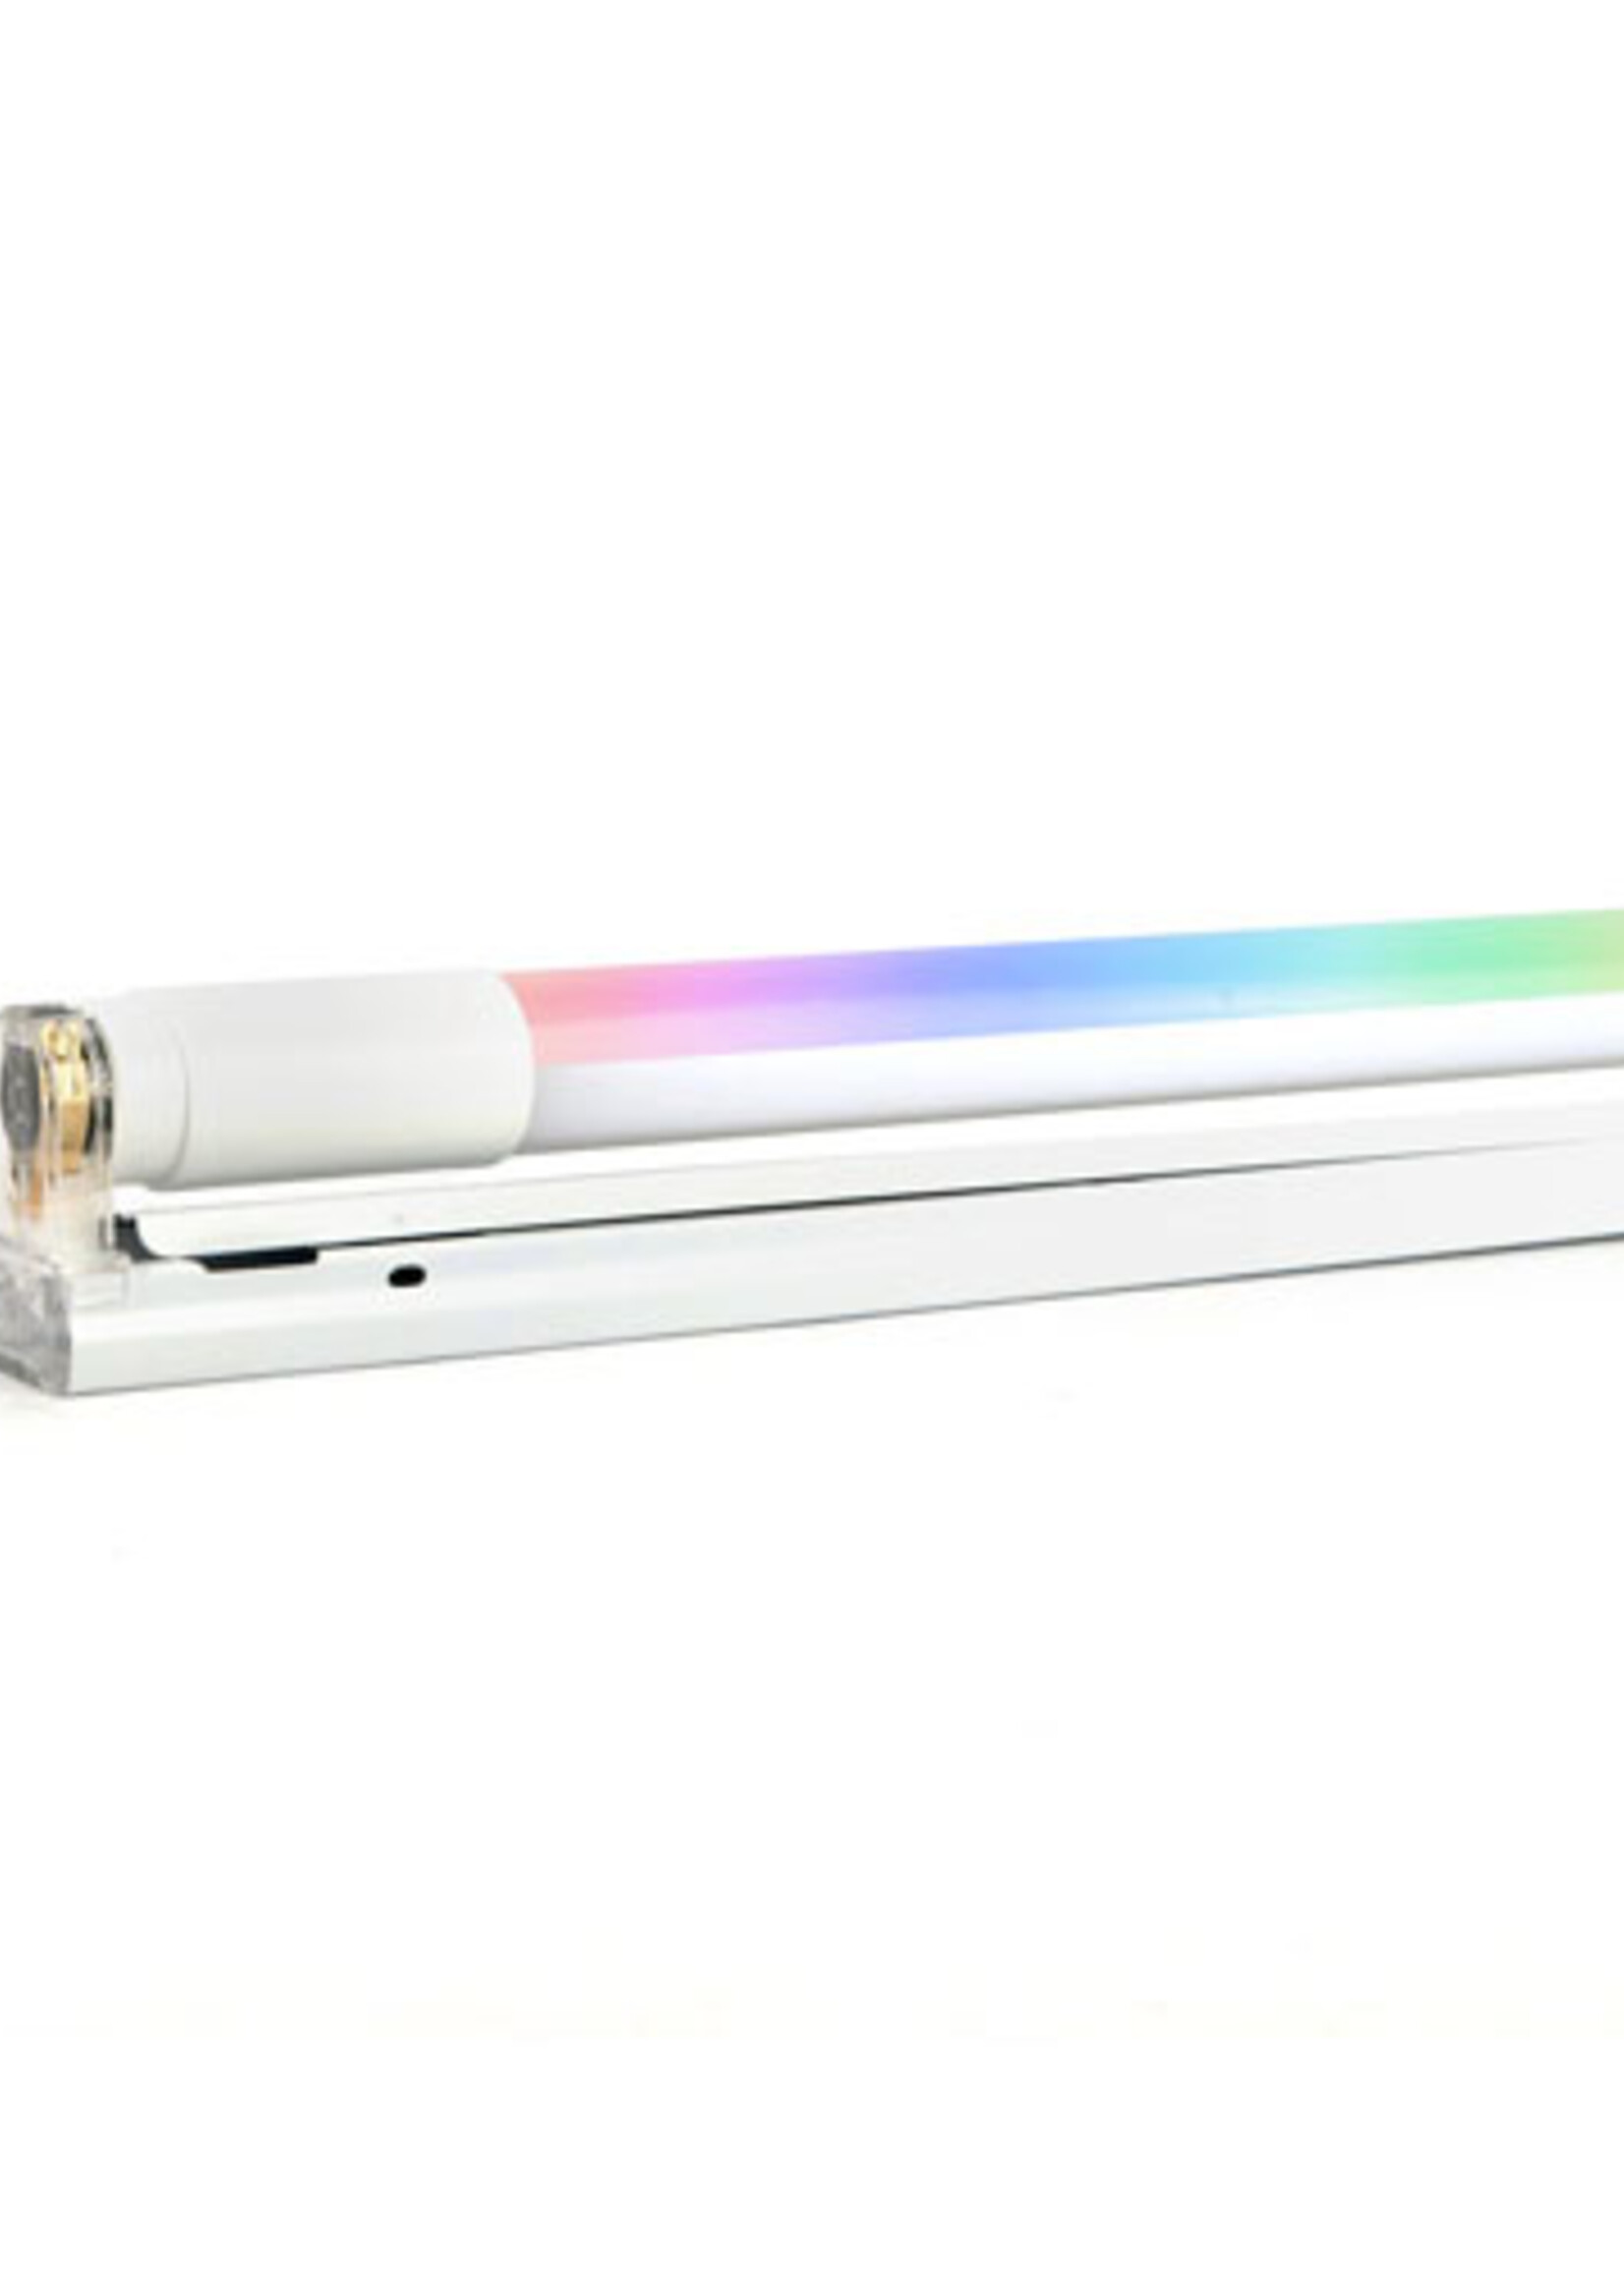 LEDWINKEL-Online Smart WiFi LED Tube Light 120cm RGB Colored Light 18W